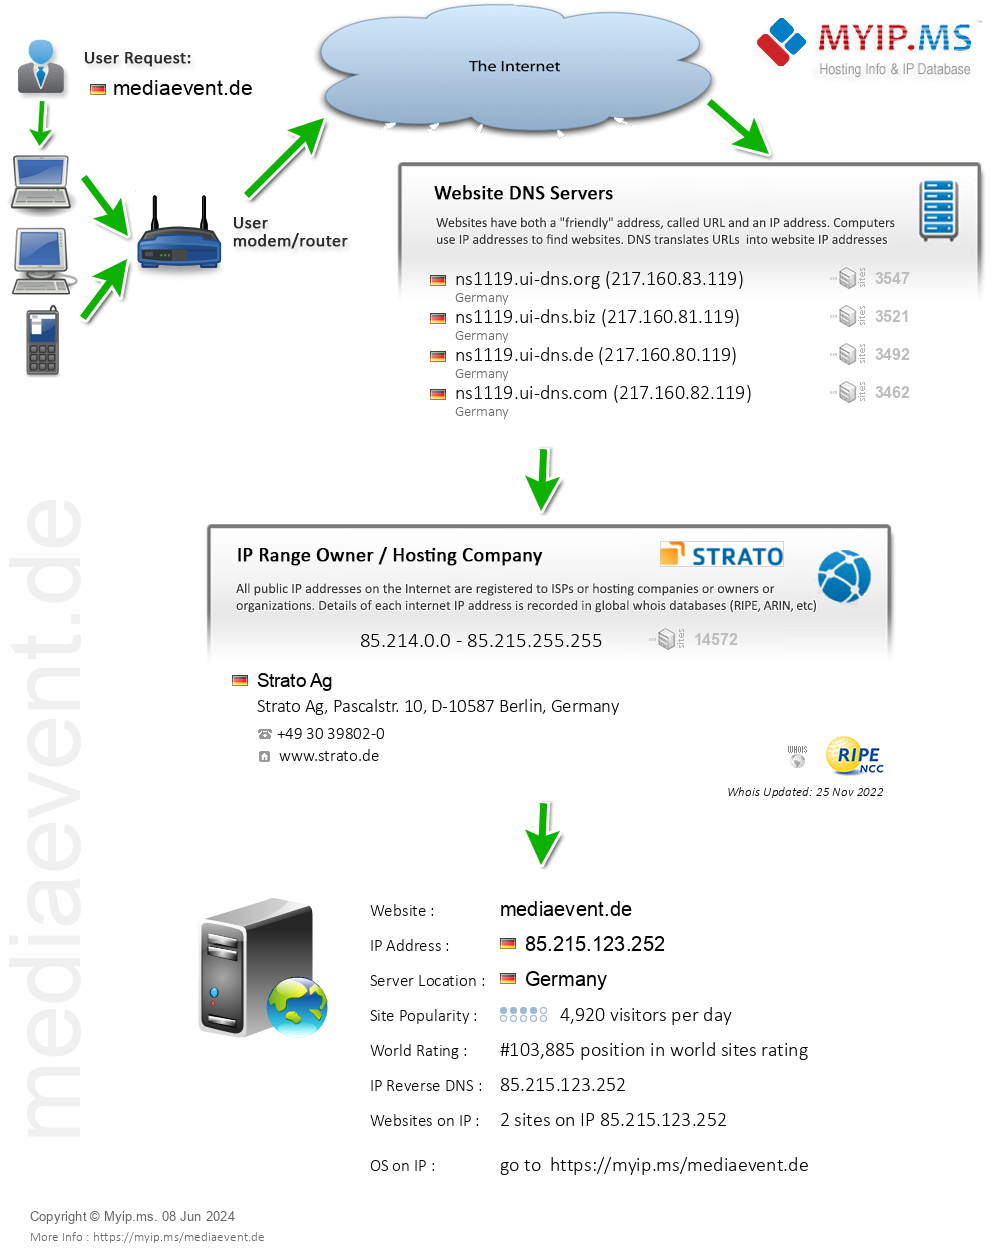 Mediaevent.de - Website Hosting Visual IP Diagram